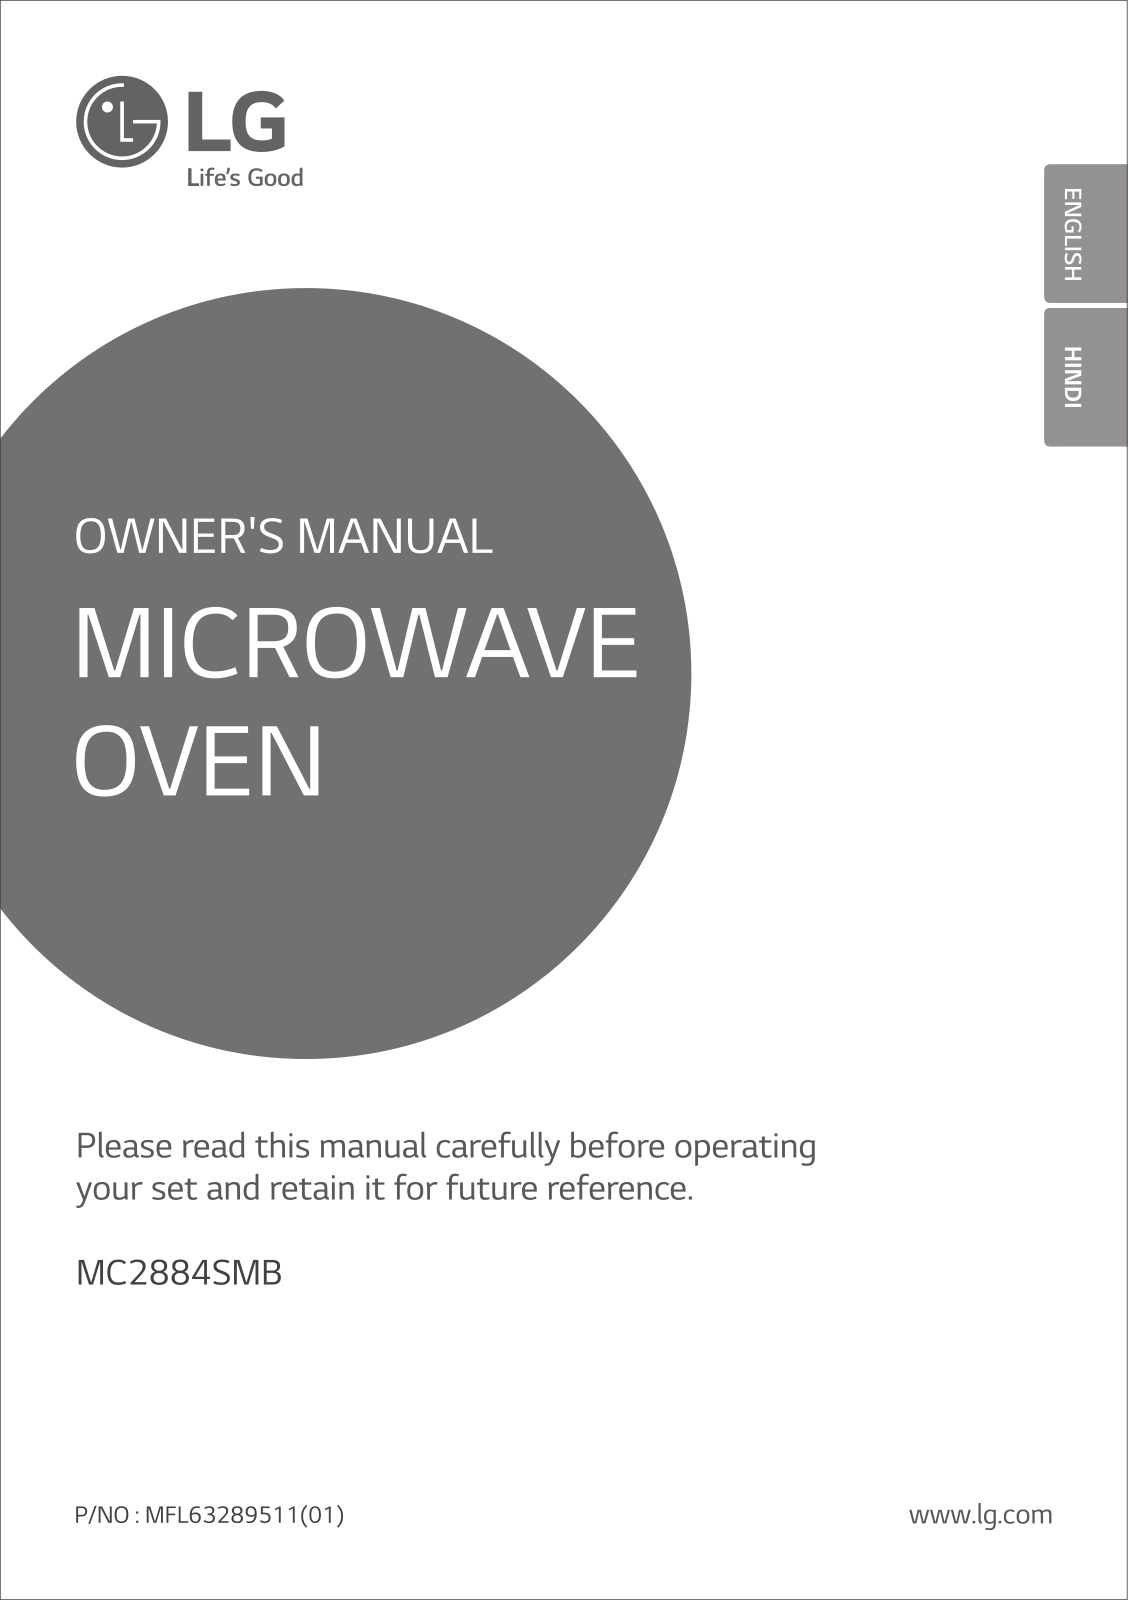 LG MC2884SMB Owner’s Manual